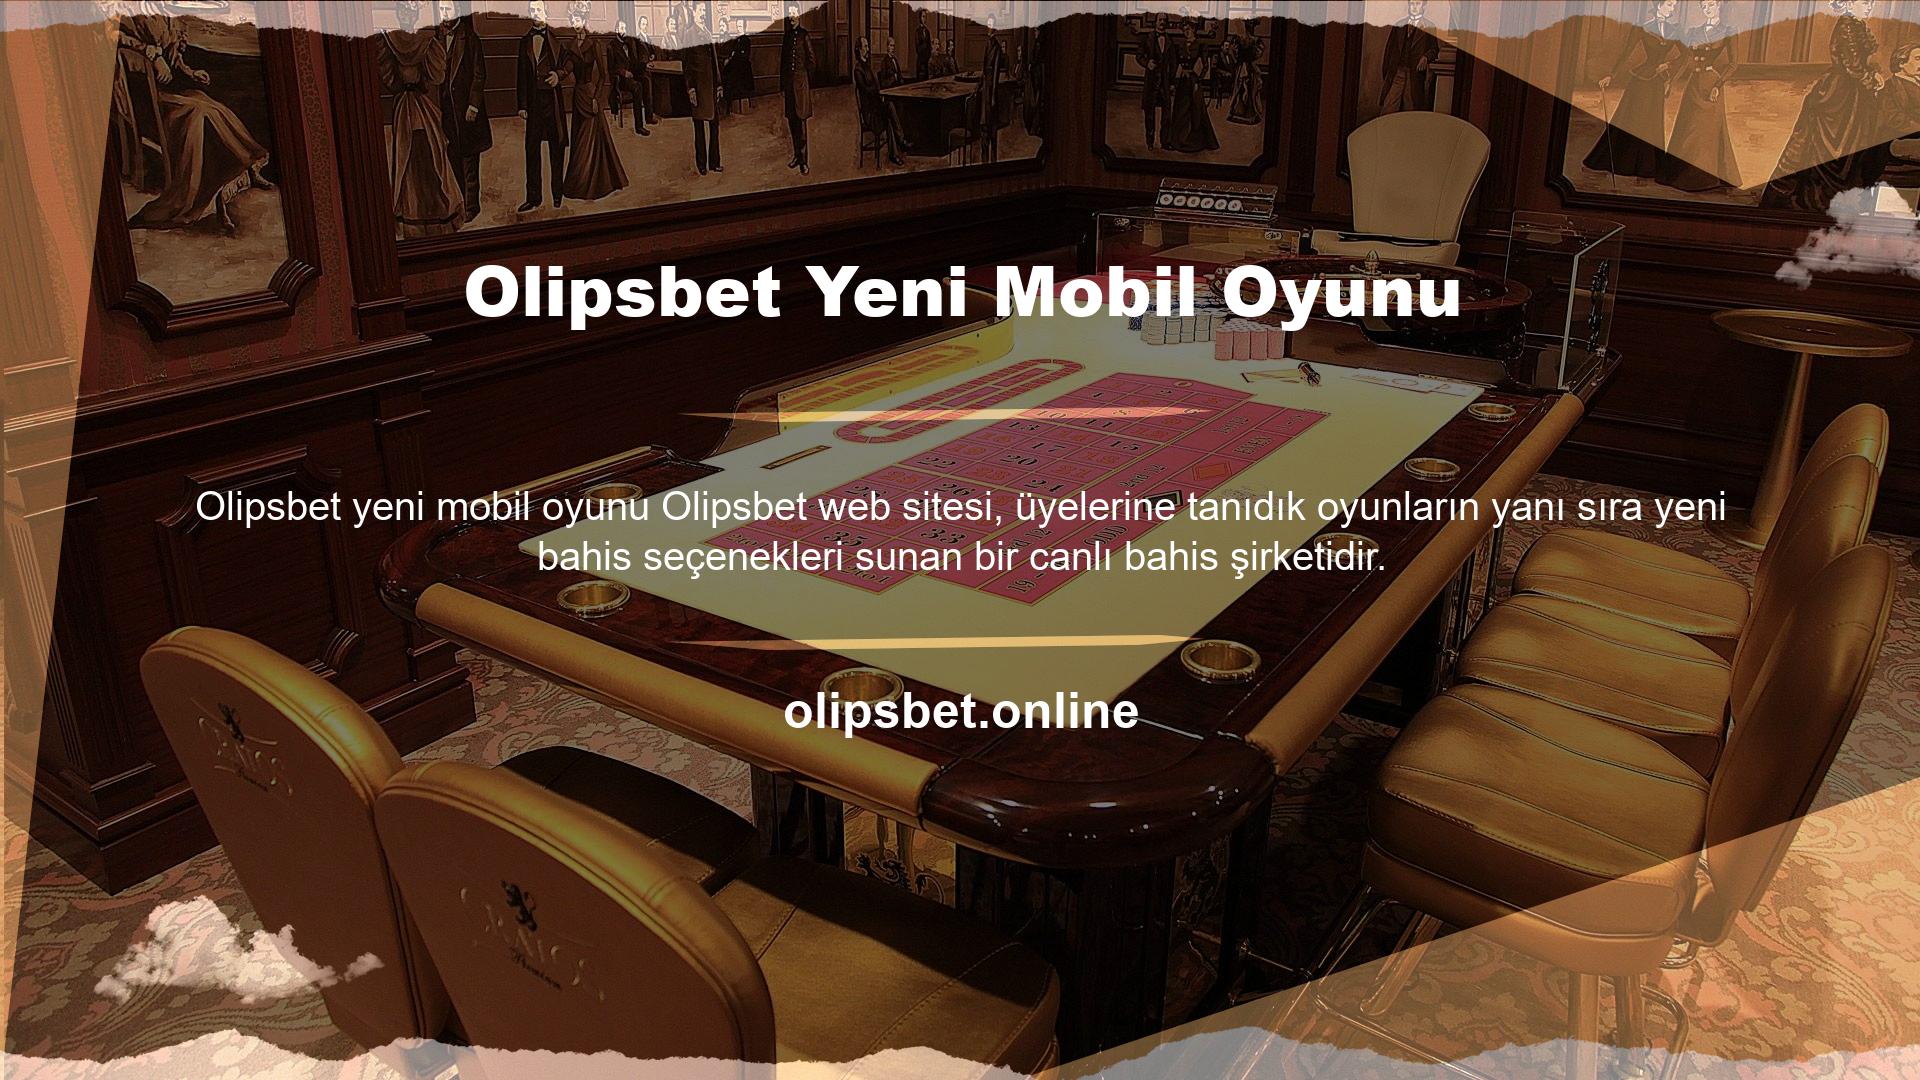 Olipsbet yeni mobil oyunu